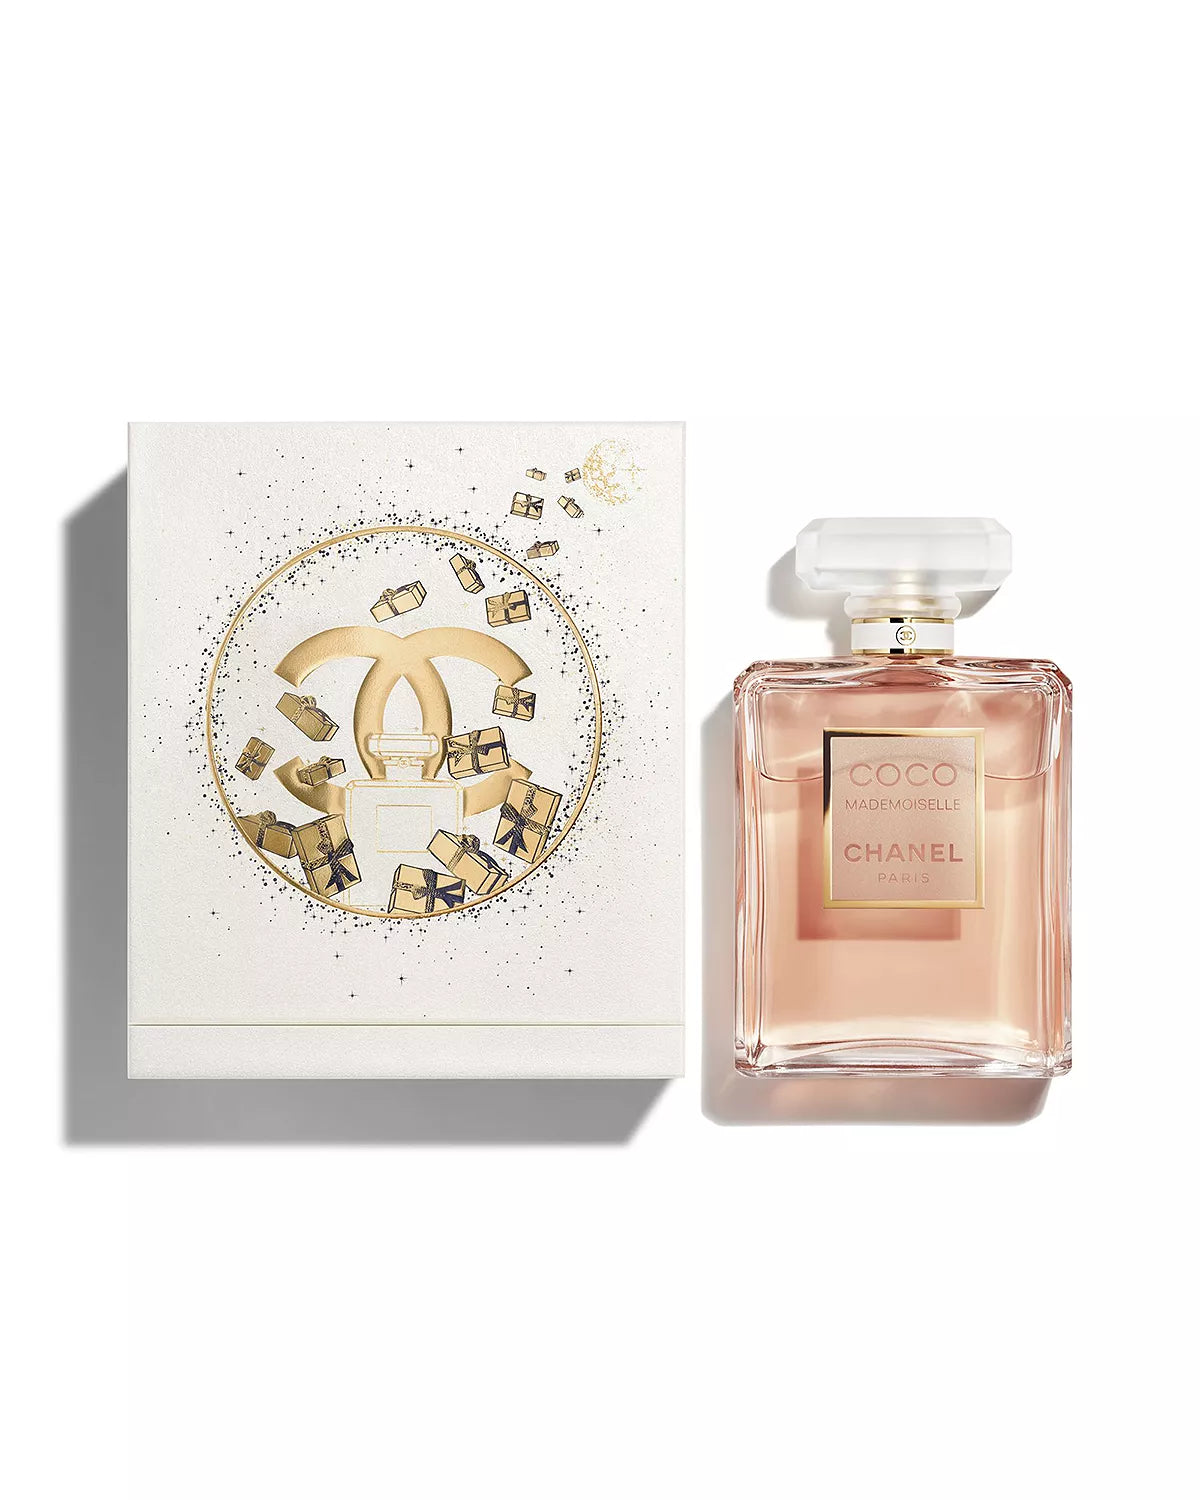 CHANEL Coco Mademoiselle EDT Spray Perfume 1.7oz / 50ml NEW IN BOX